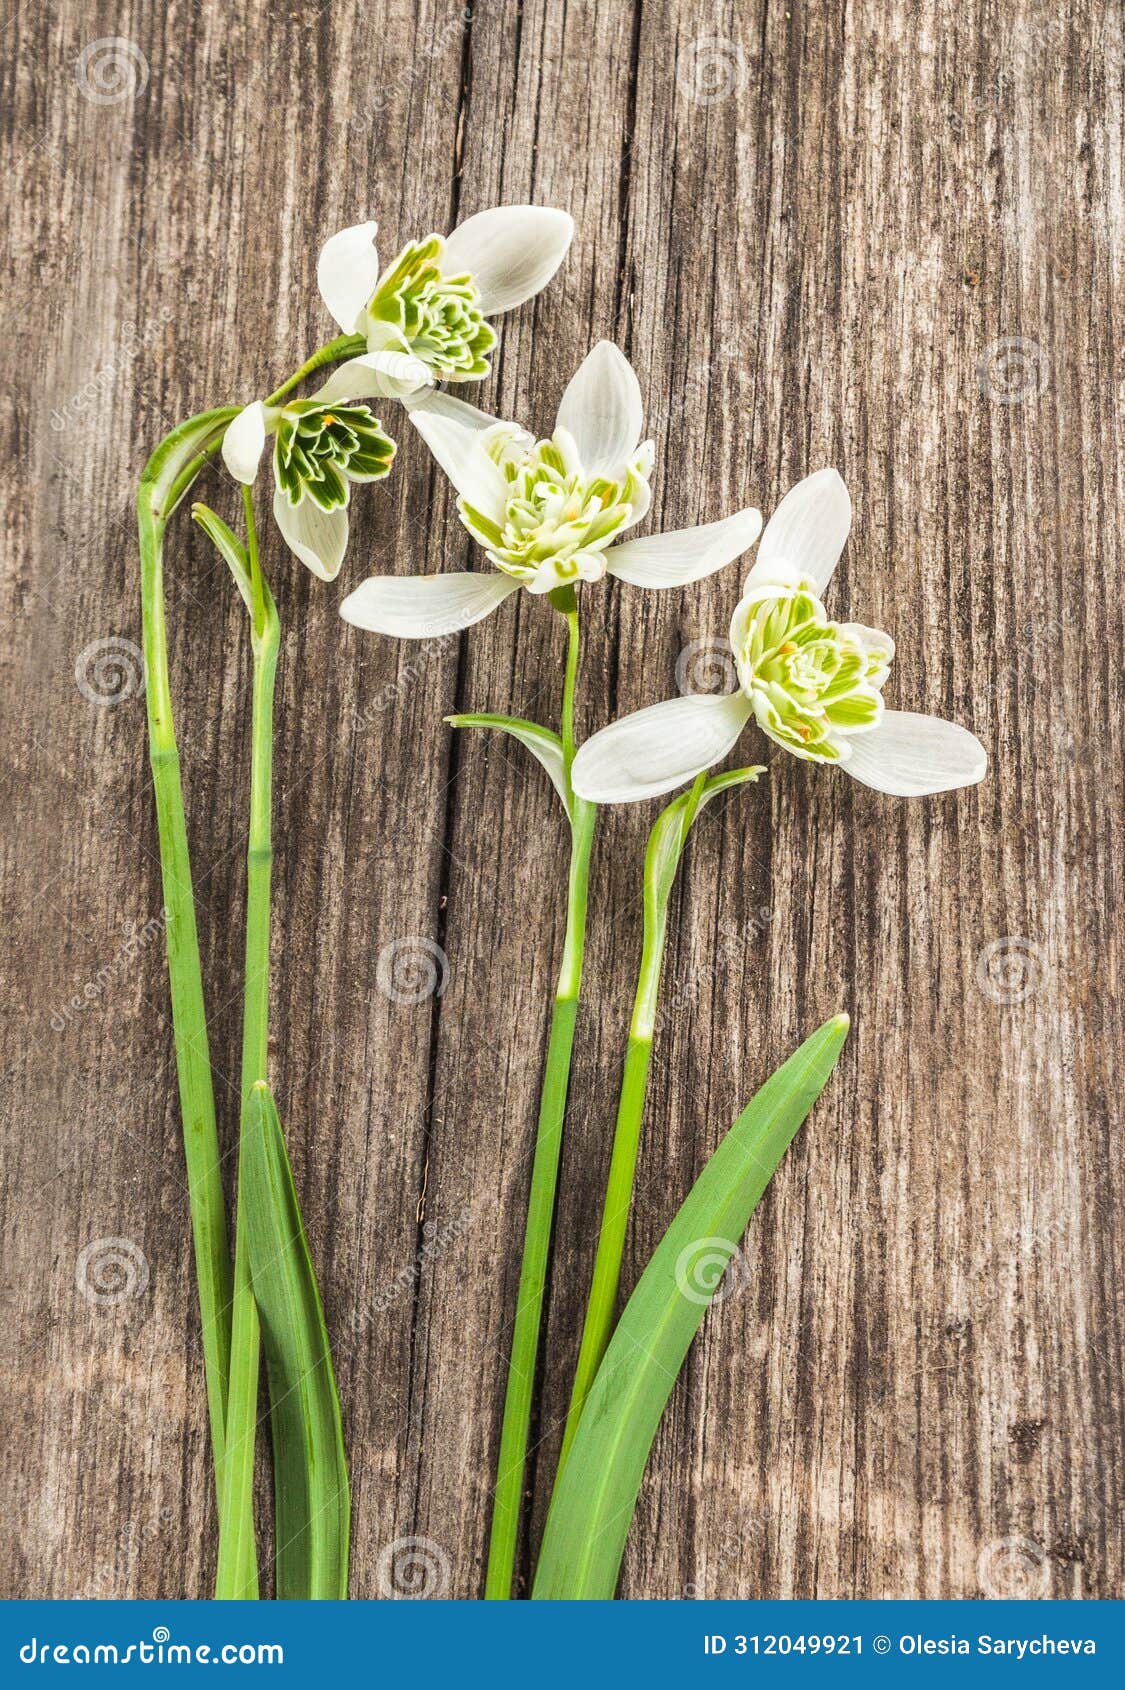 double galanthus (snowdrops) flore pleno and hippolyta